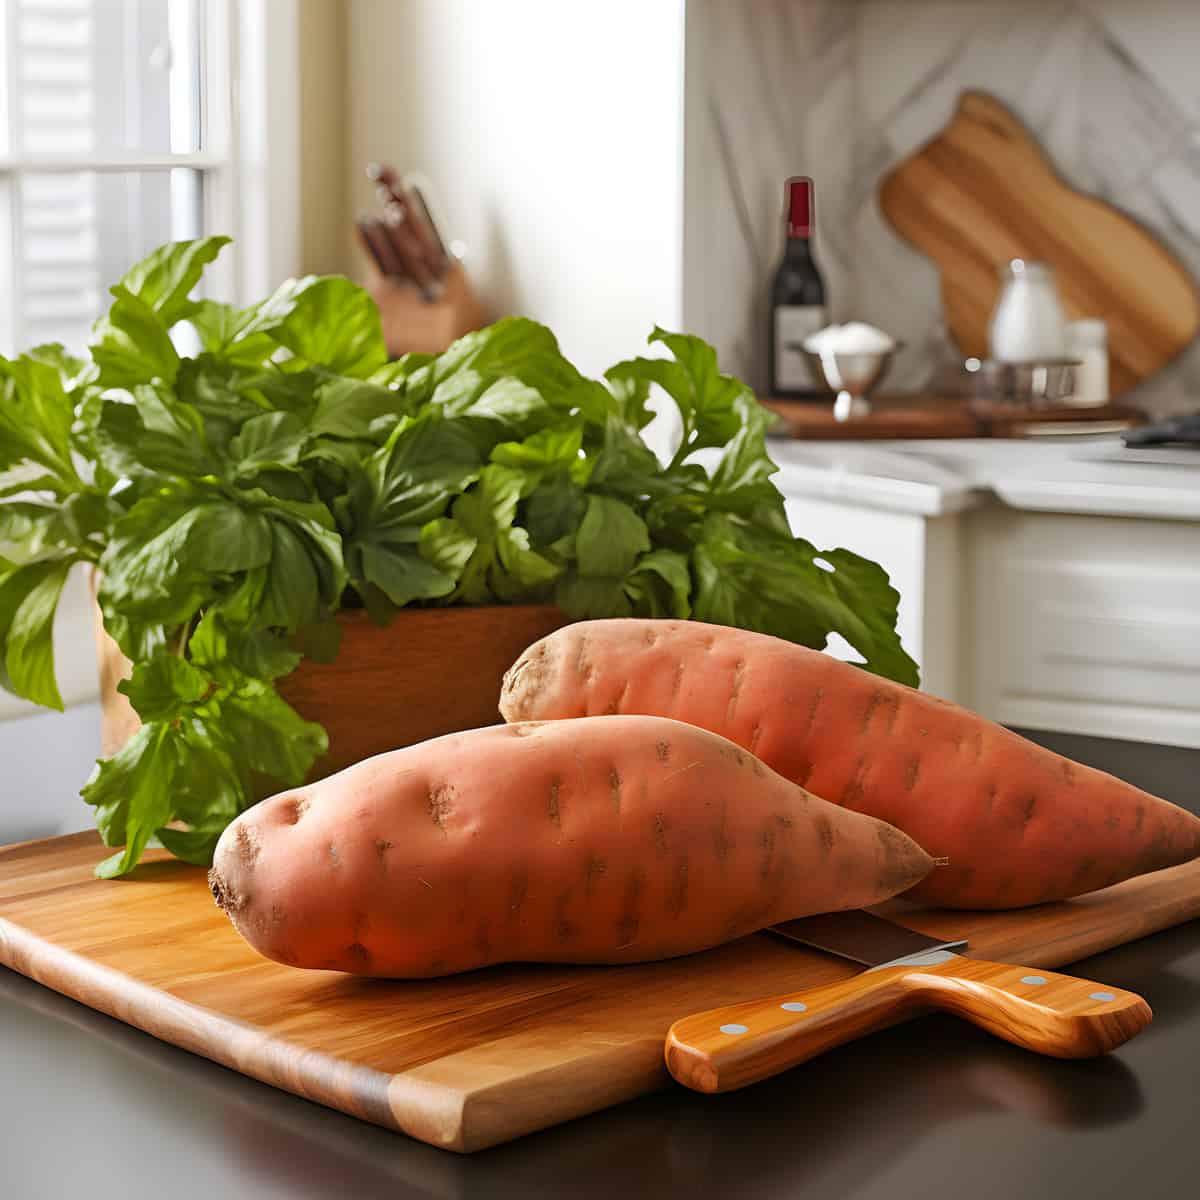 Kona B Sweet Potatoes on a kitchen counter